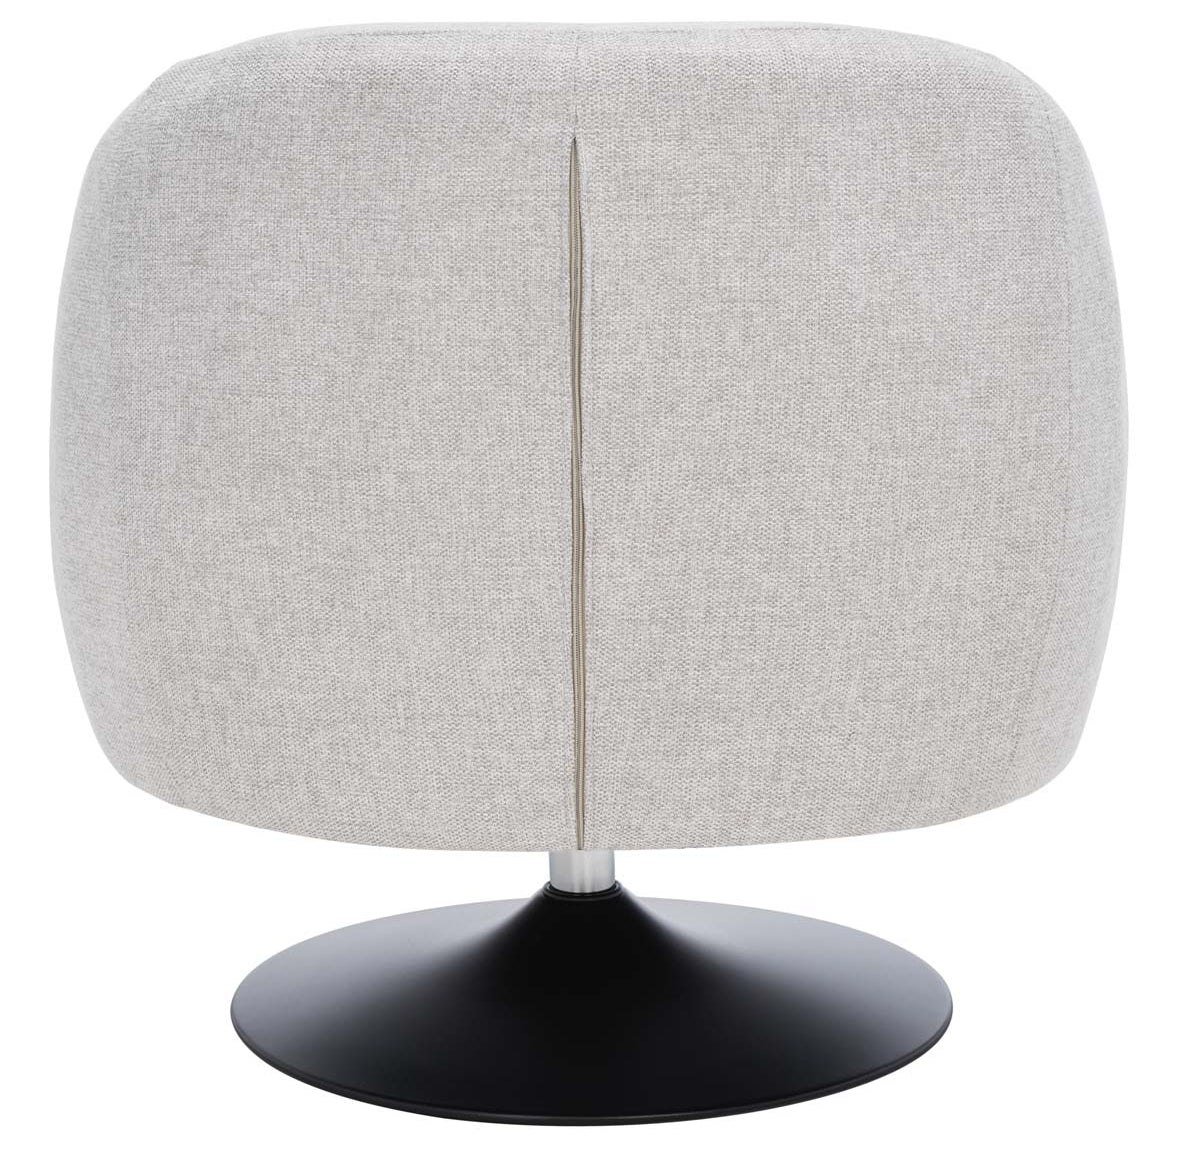 Safavieh Ezro Upholstered Accent Chair , ACH5105 - Light Grey / Black